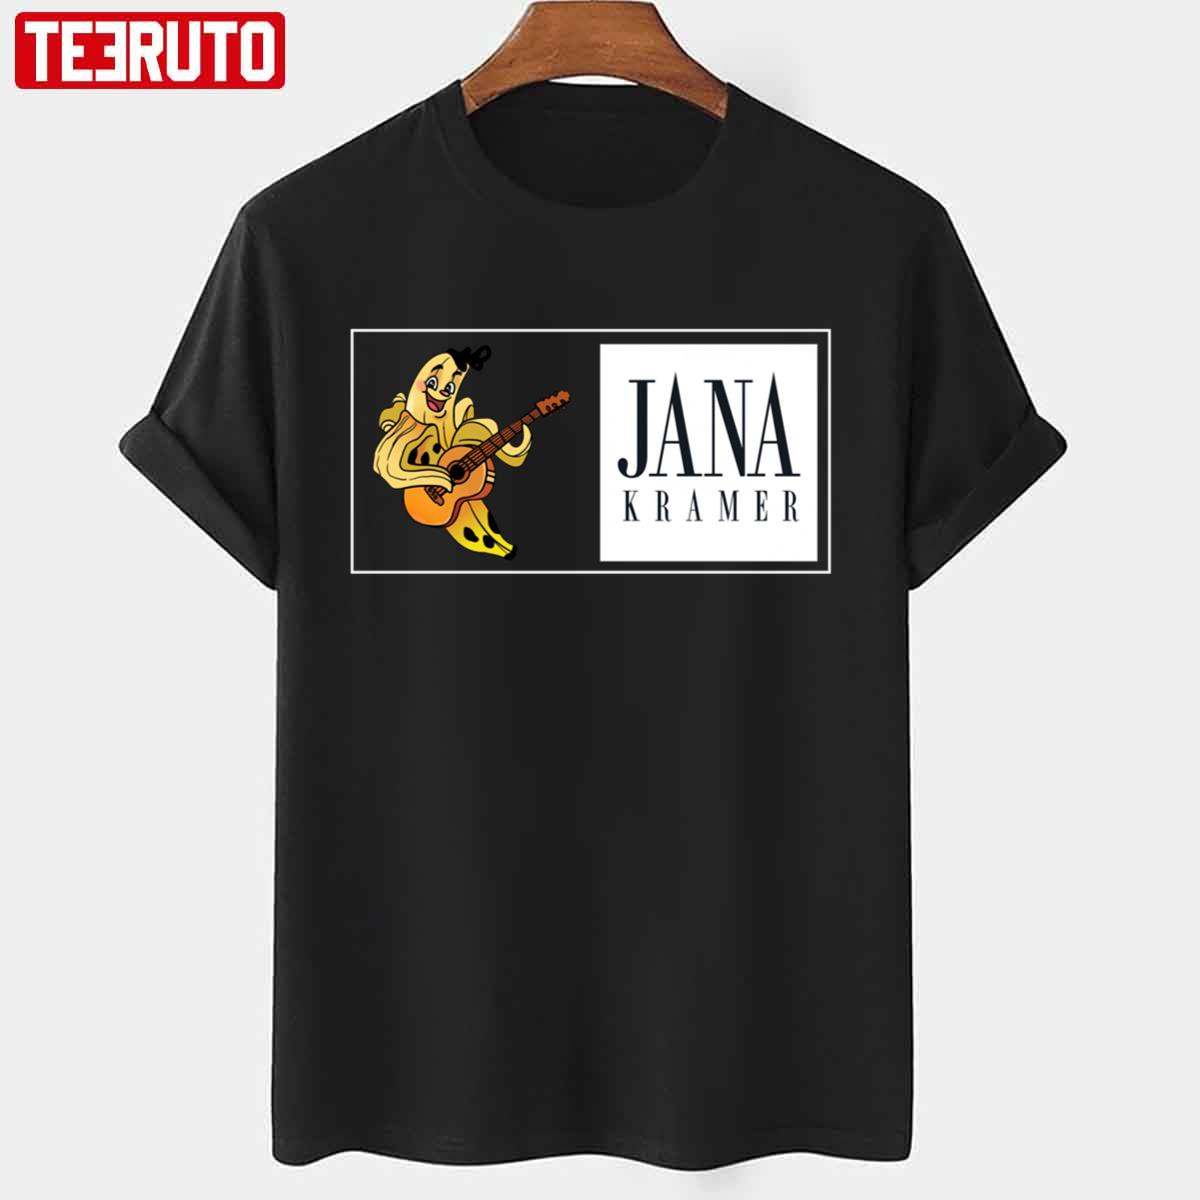 Jana Kramer Design Unisex T-shirt